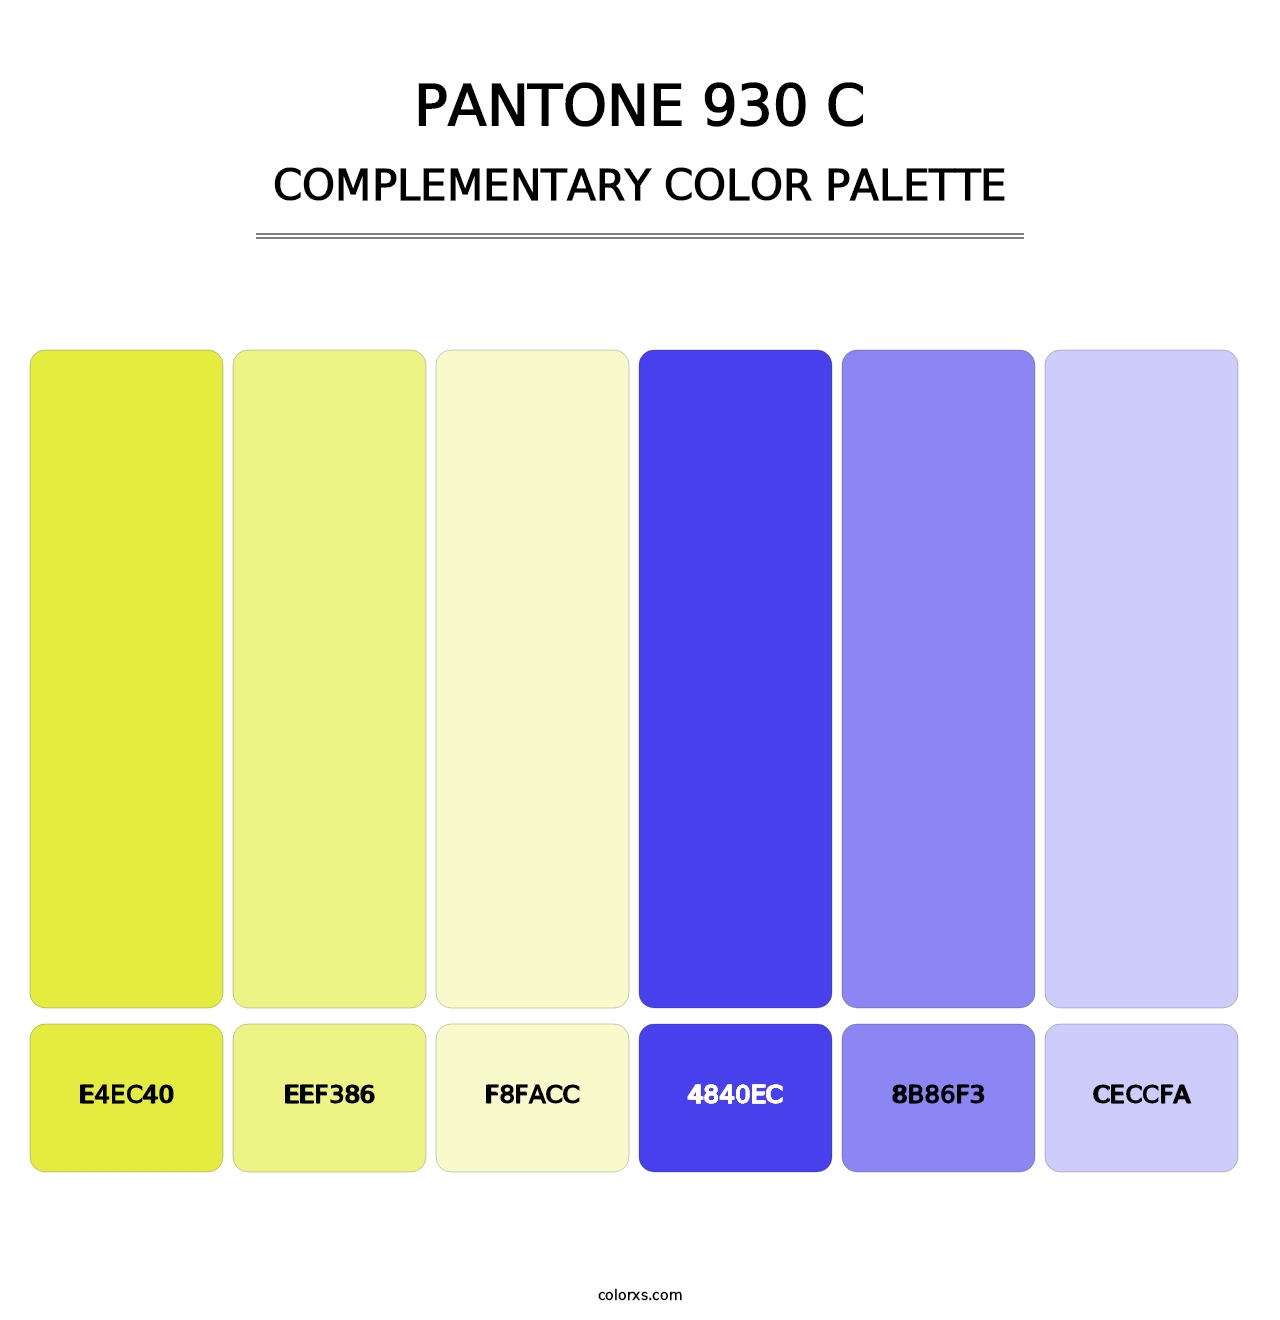 PANTONE 930 C - Complementary Color Palette